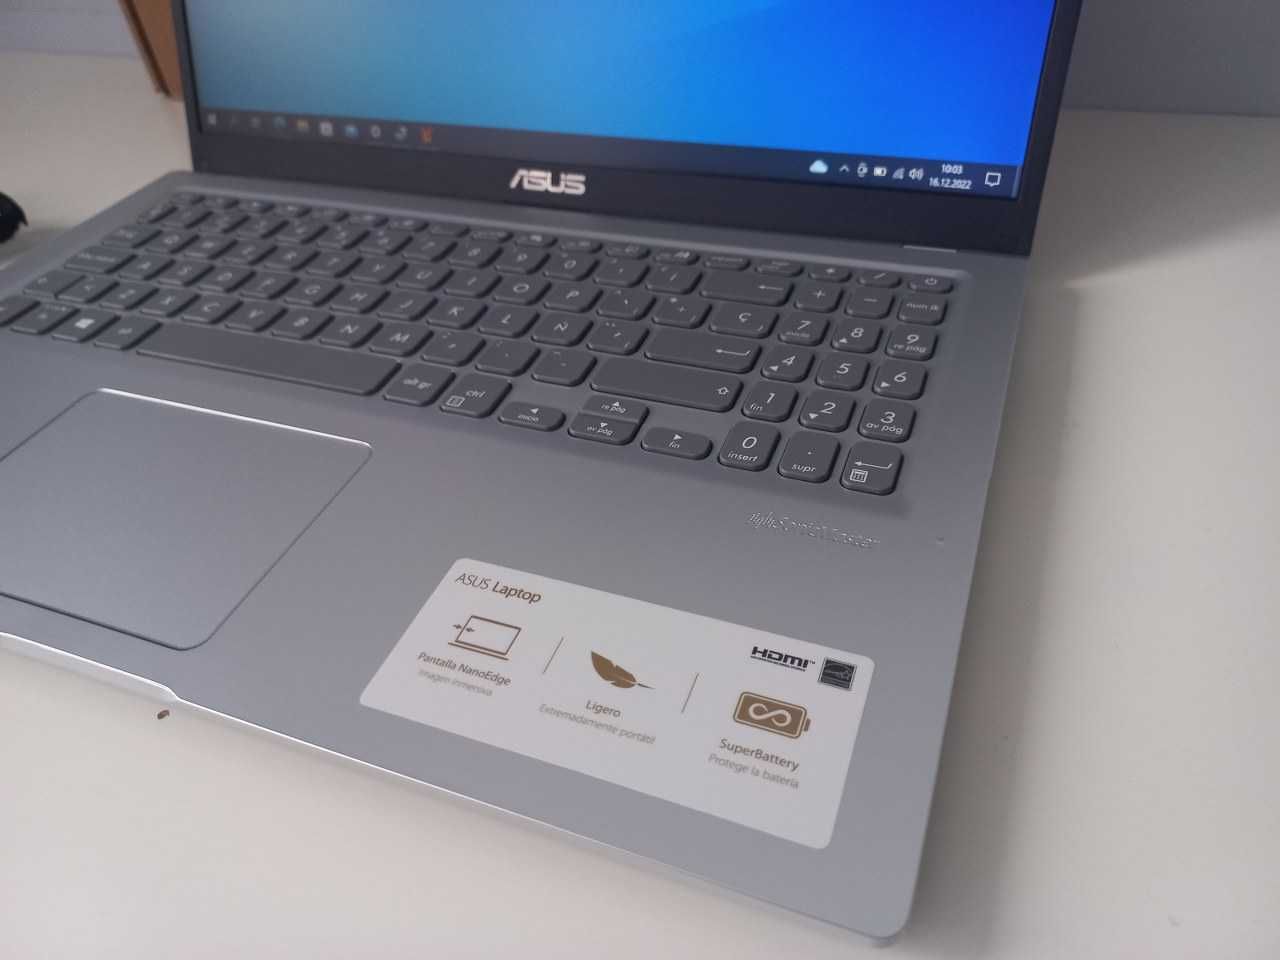 ASUS D515DA-BR777 Ryzen 7 3700U 8GB RAM 512GB SSD RX Vega 10 Laptop